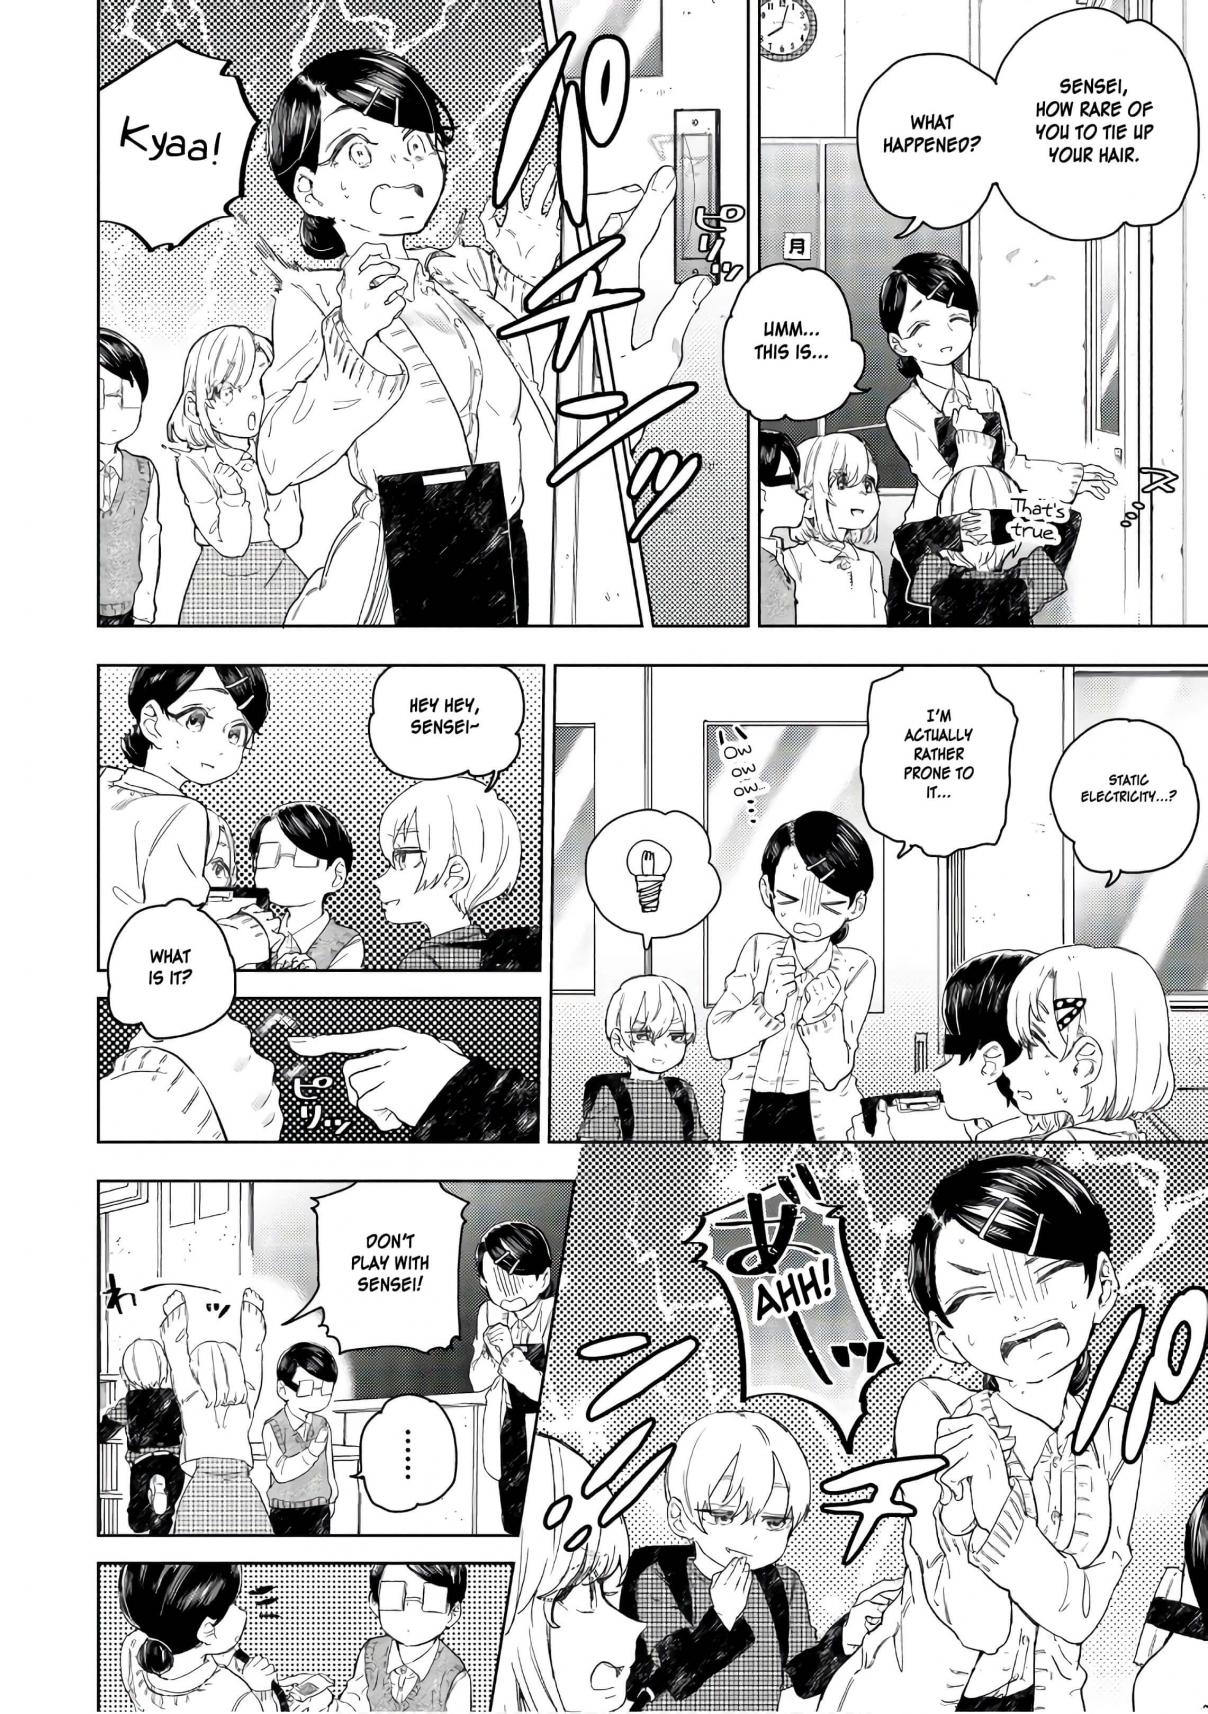 Eguchi kun Doesn't Miss a Thing Vol. 3 Ch. 16 Eguchi And Friends